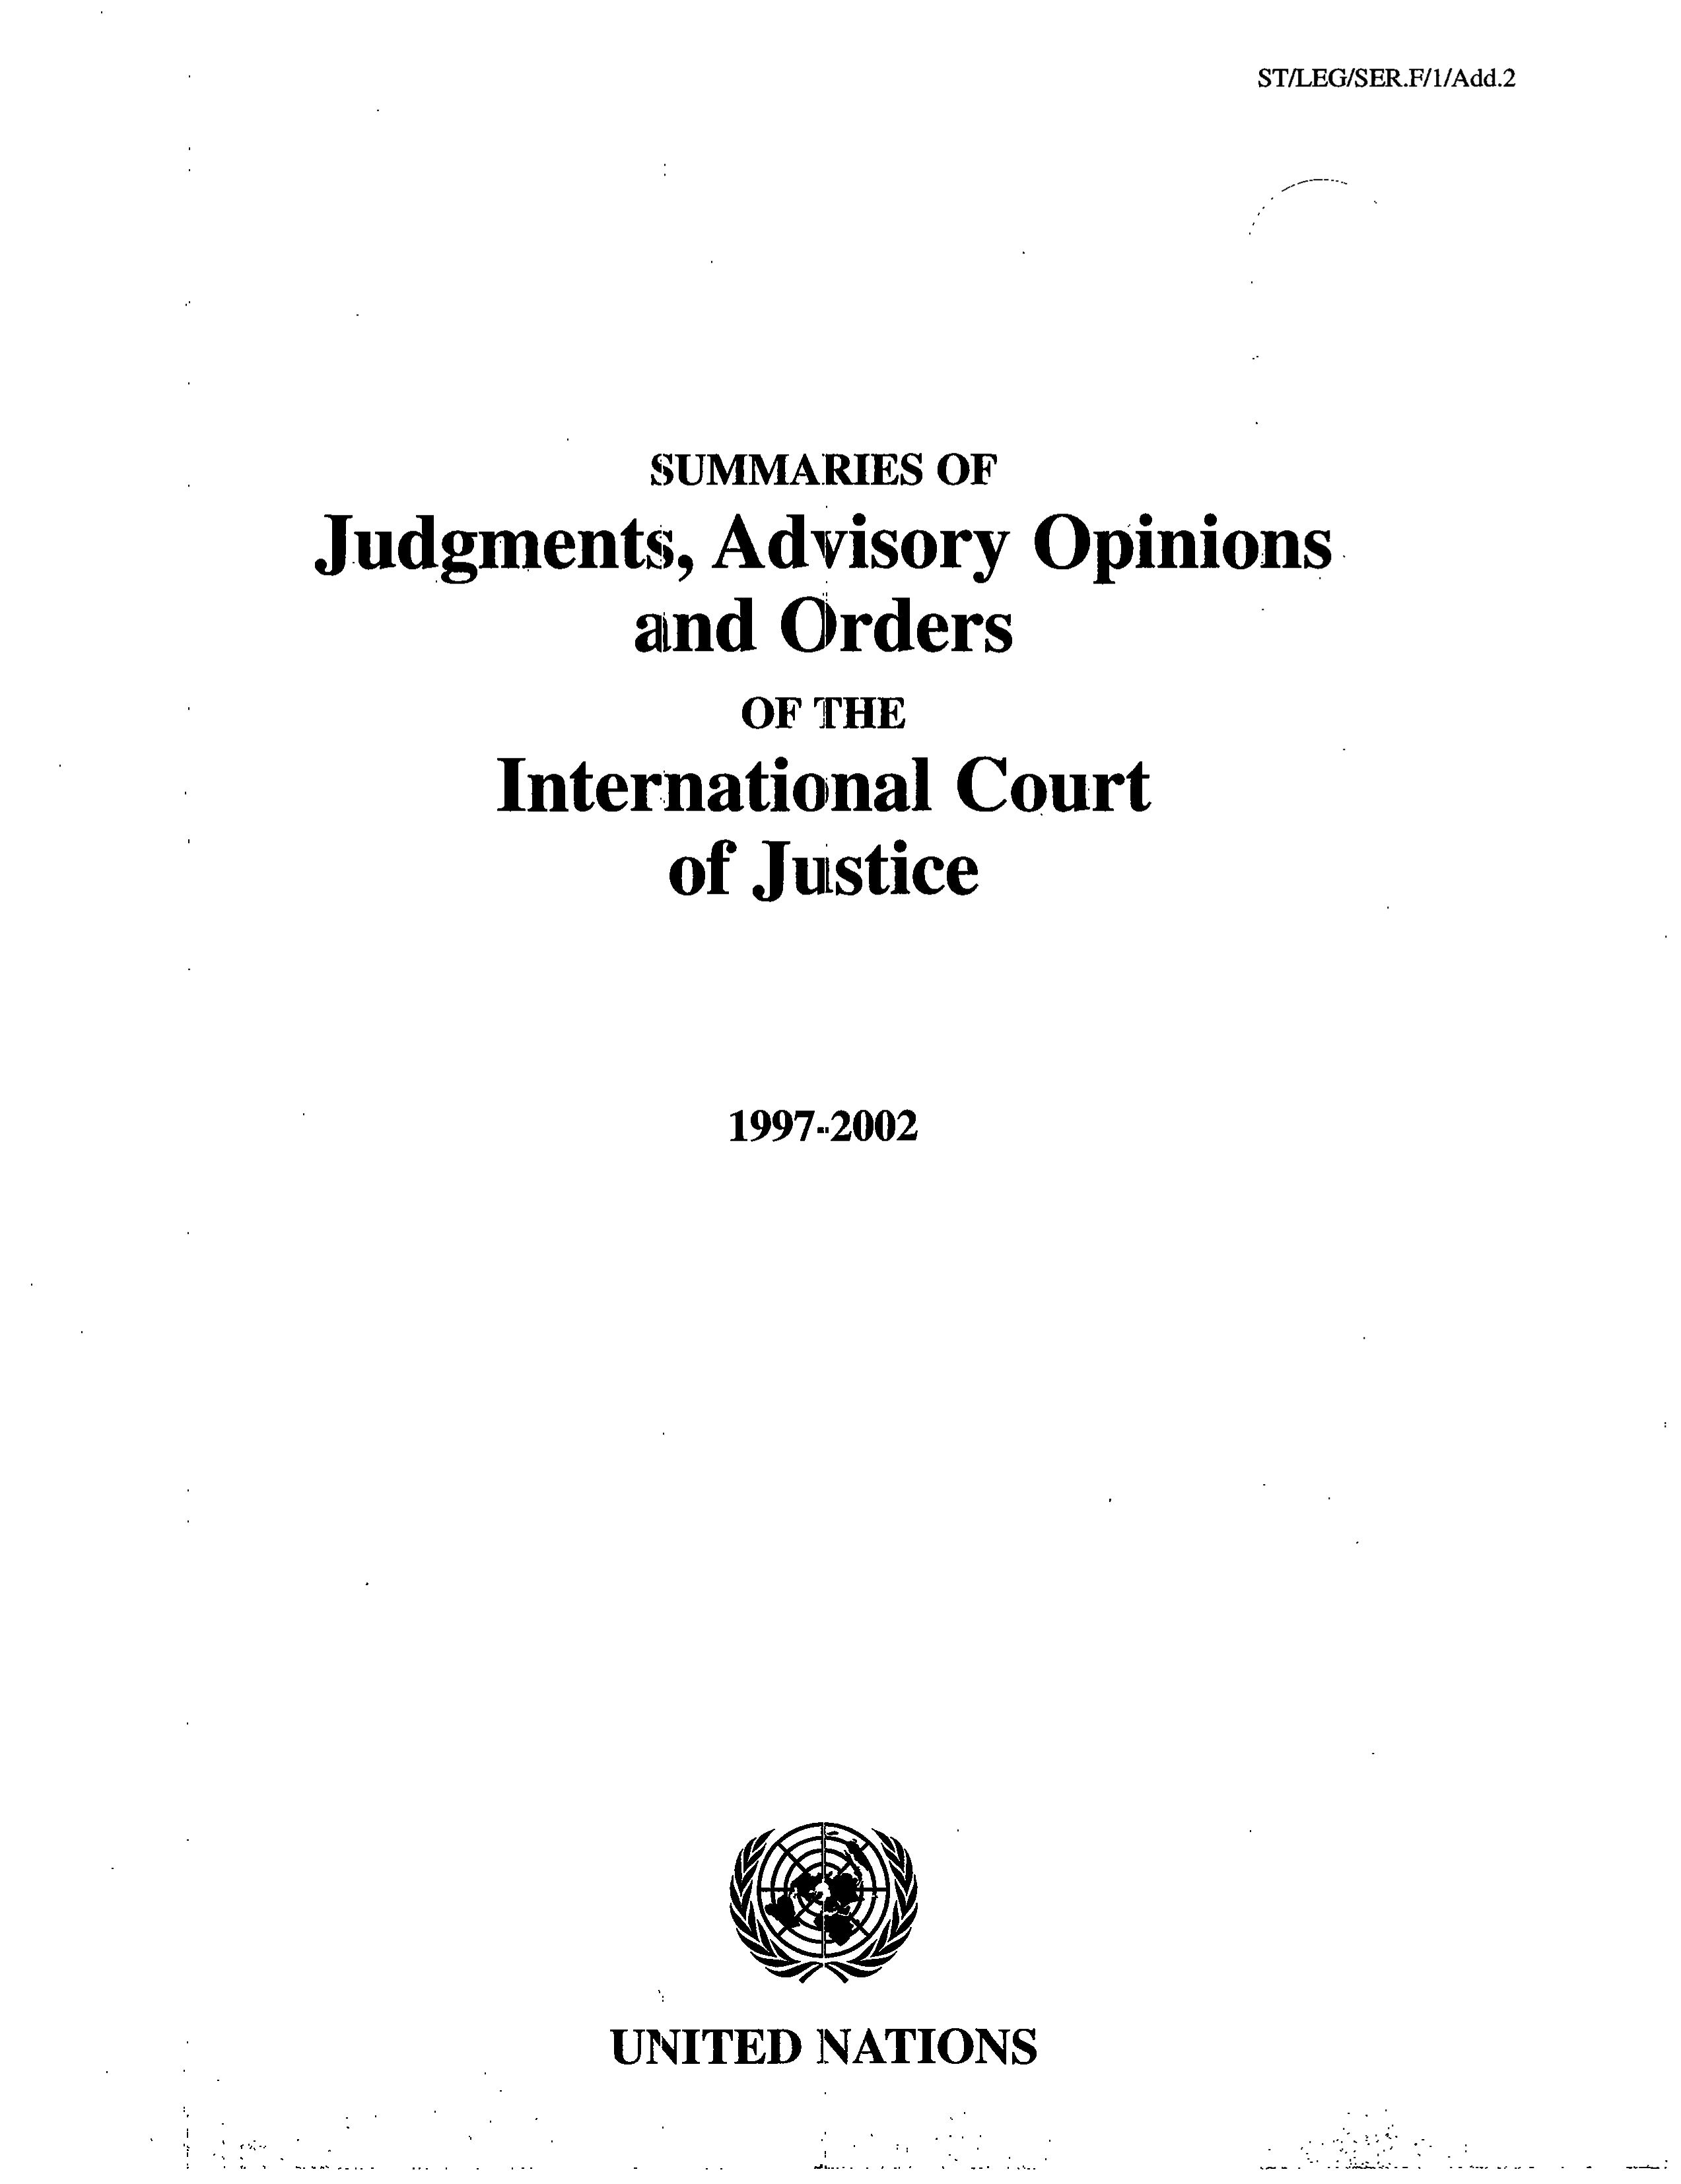 image of Case concerning Gabcíkovo-Nagymaros project (Hungary/Slovakia) judgment of 25 September 1997